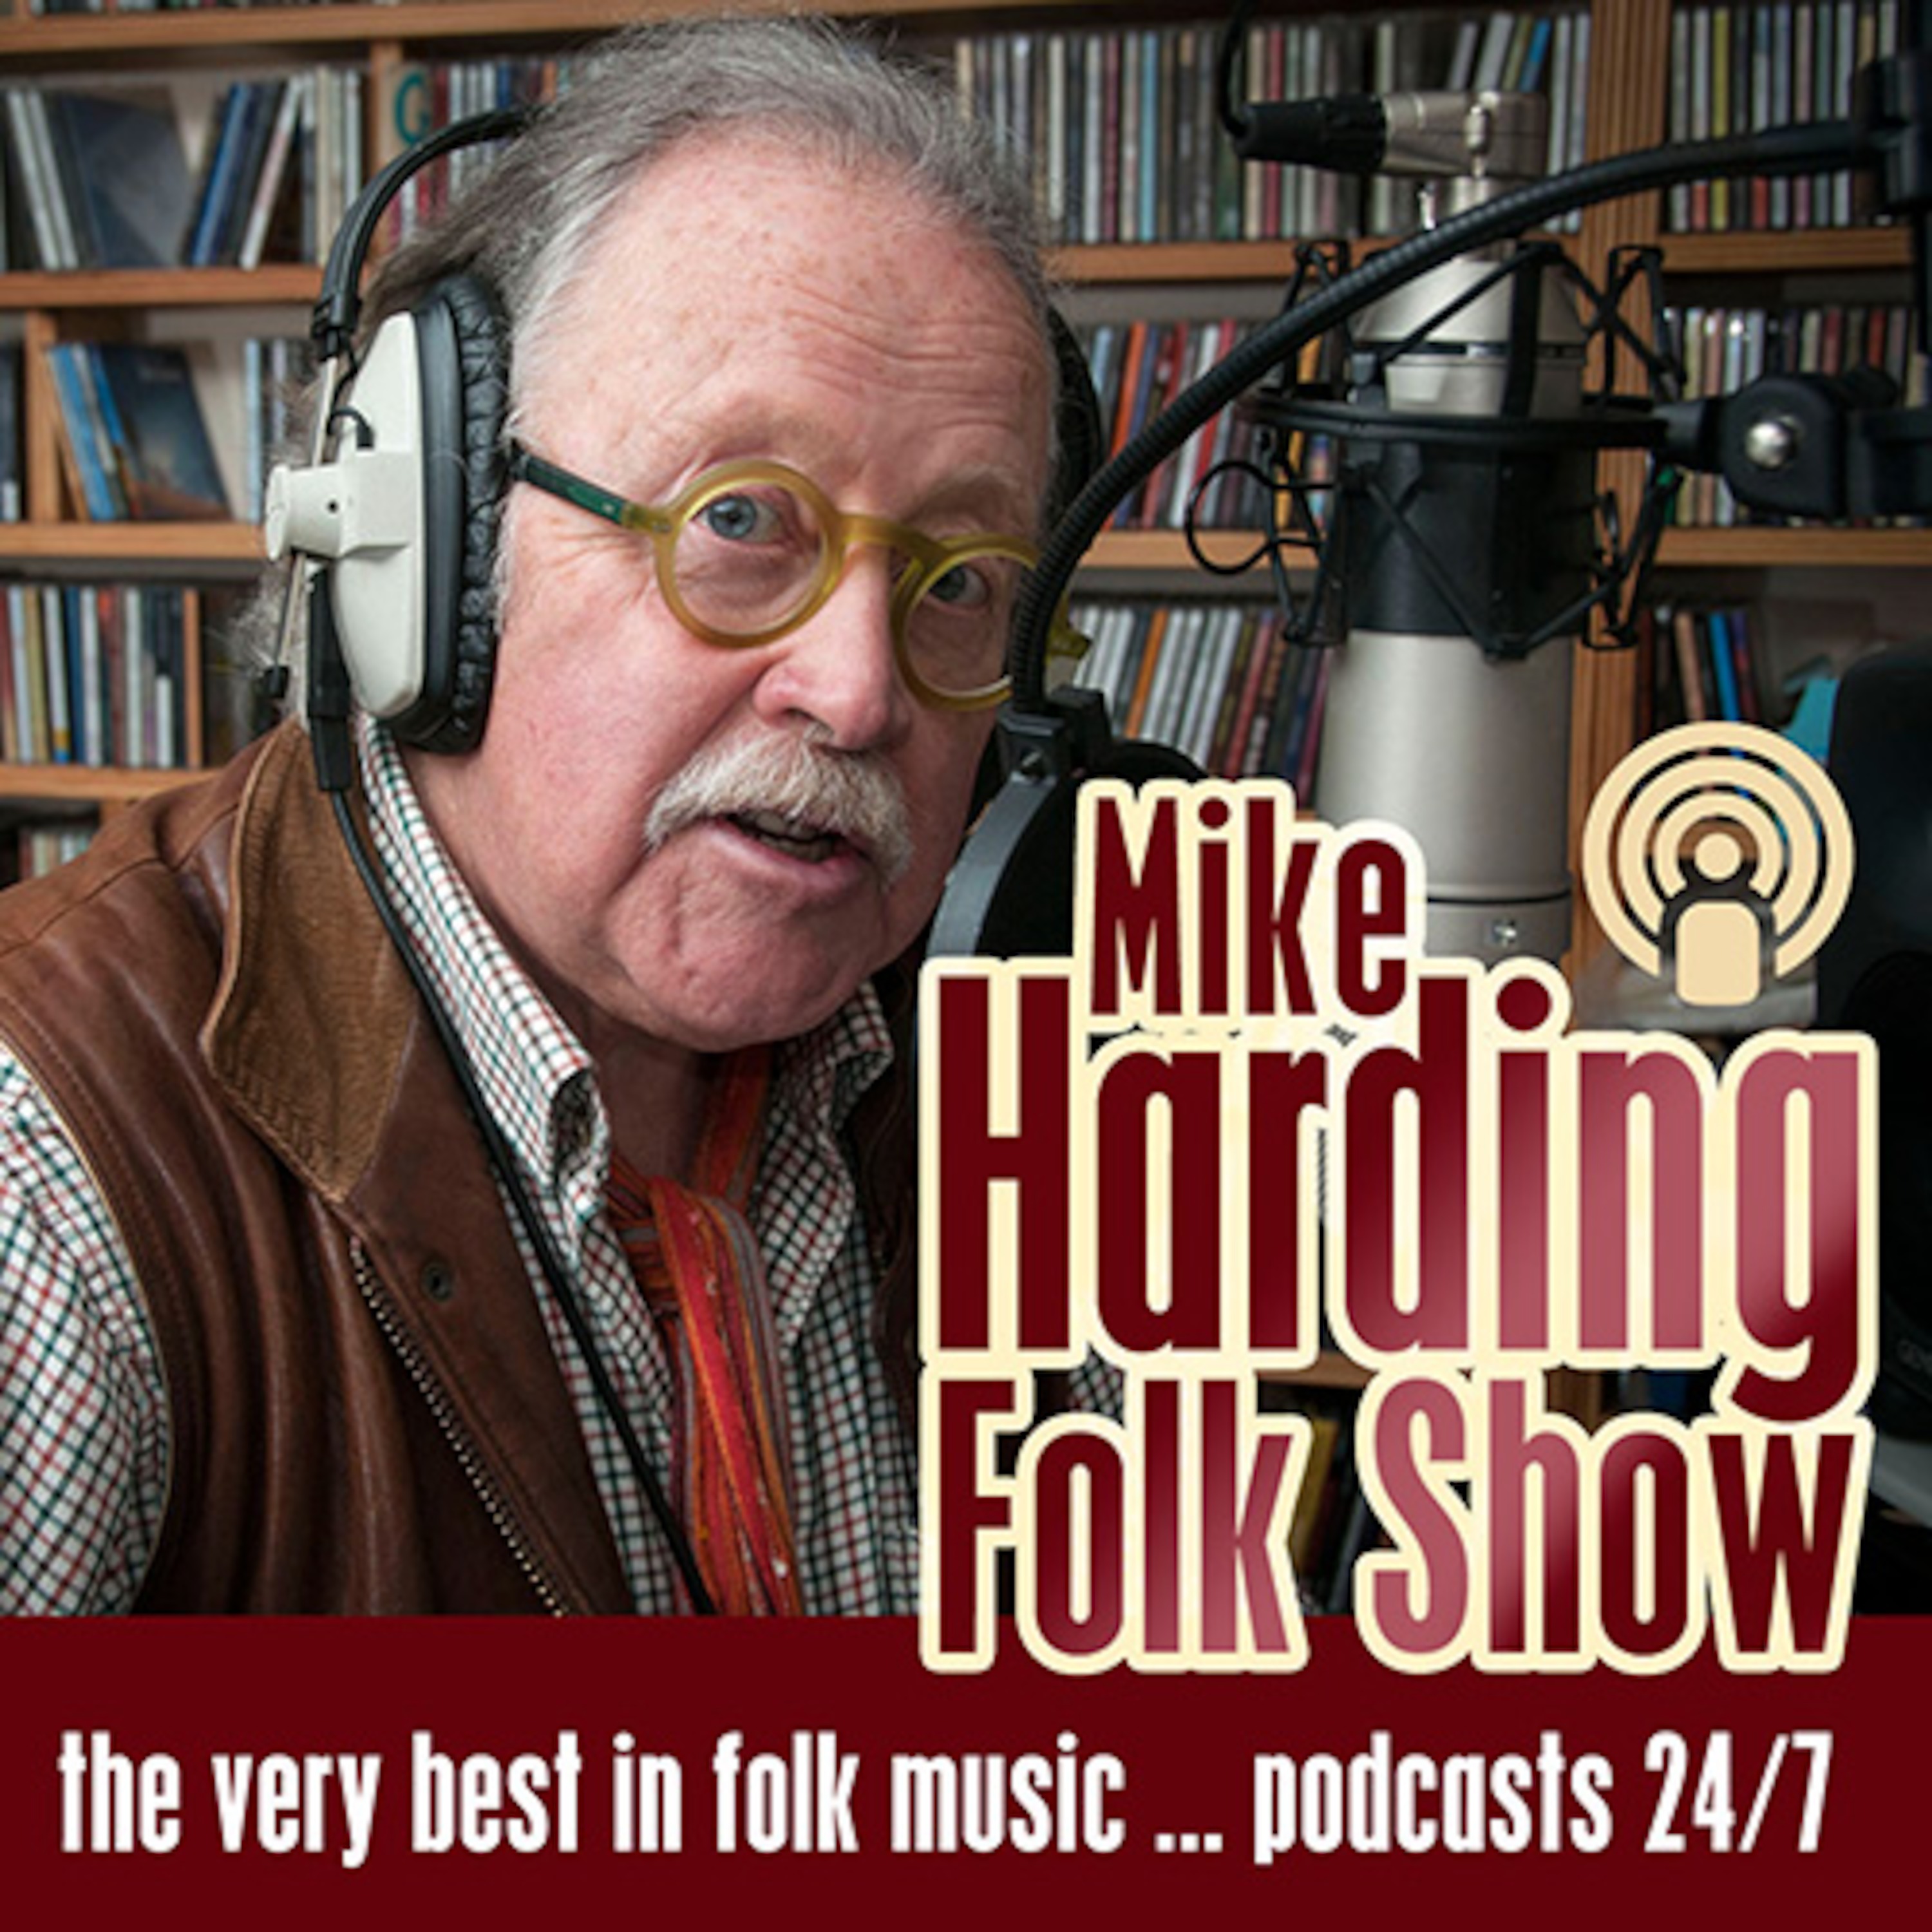 Mike Harding Folk Show 257